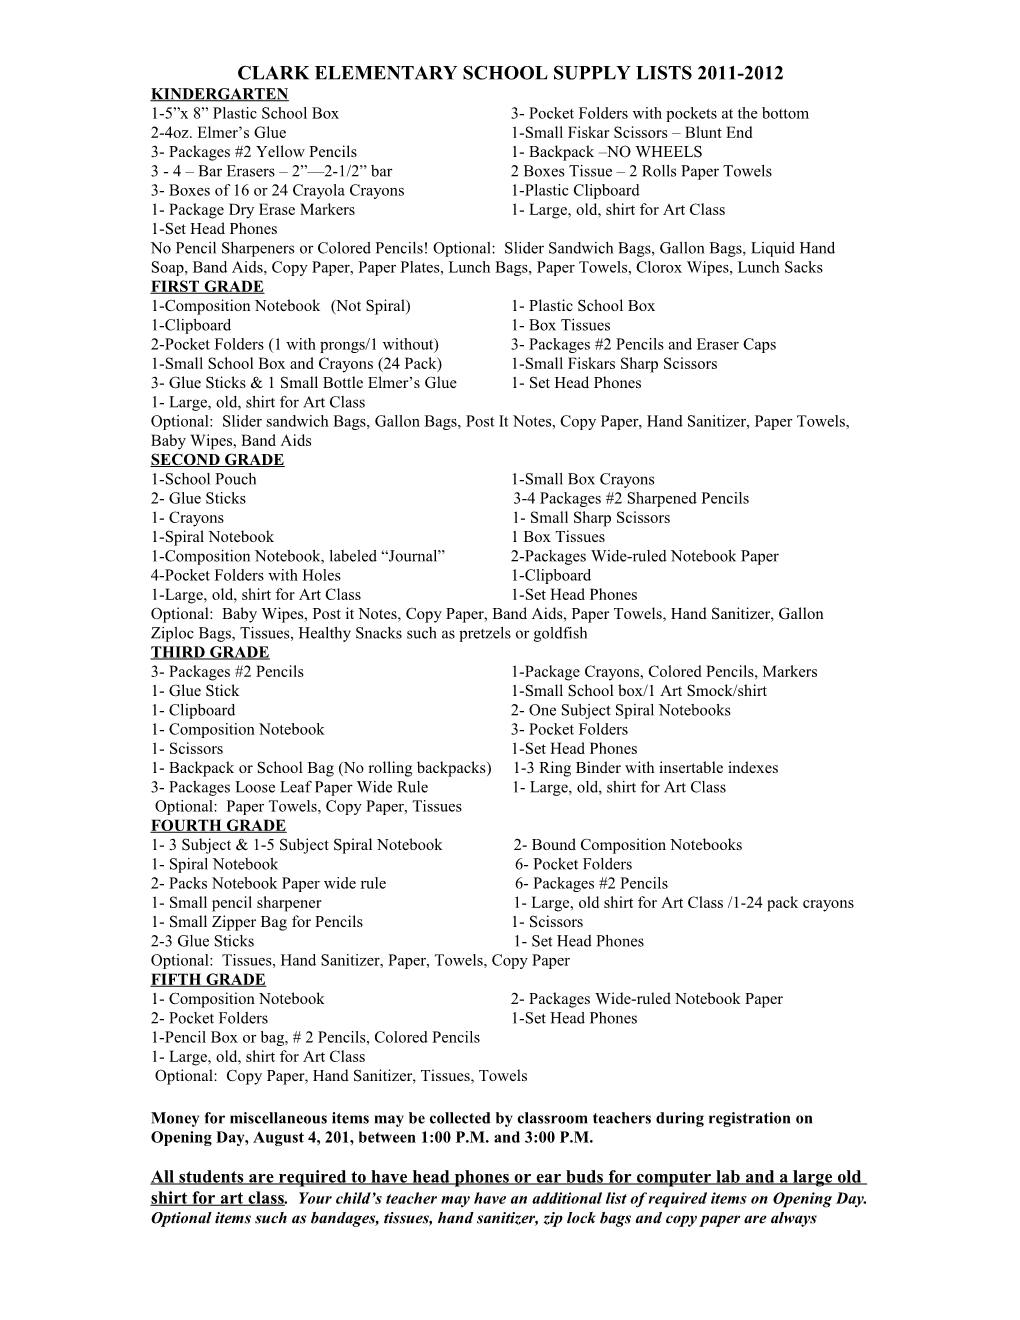 Clark Elementary School Supply Lists